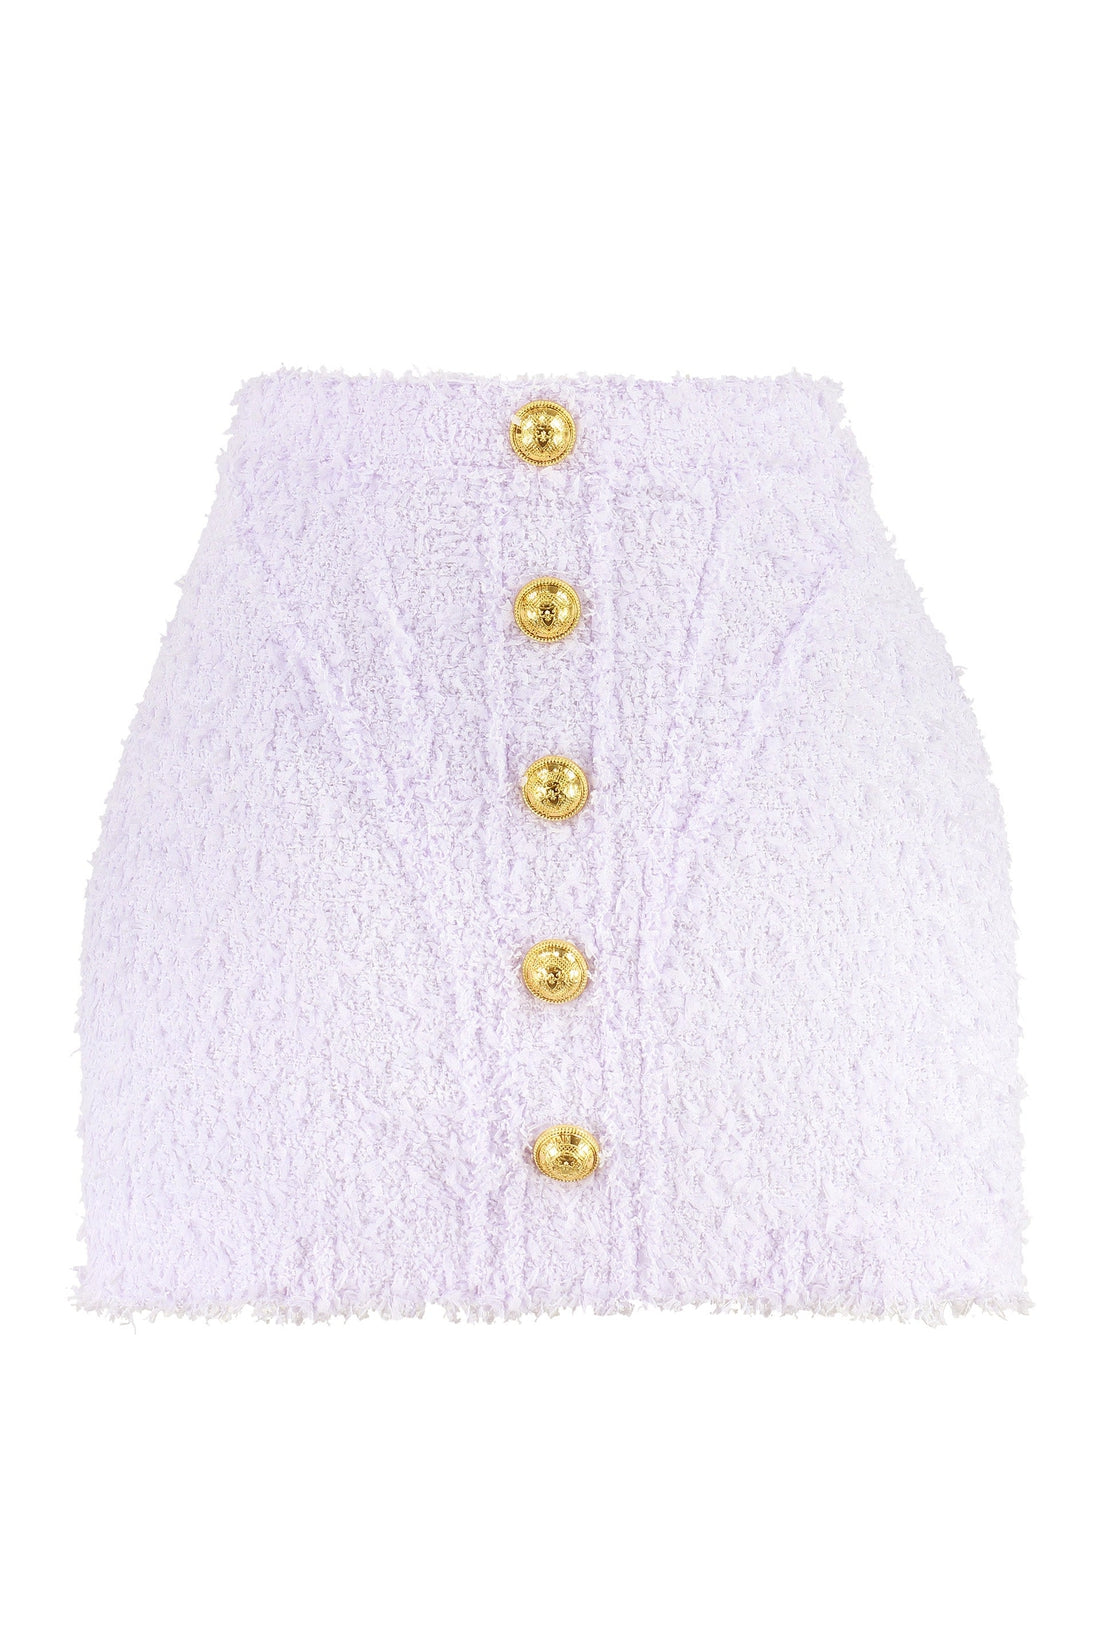 Balmain-OUTLET-SALE-Tweed mini-skirt-ARCHIVIST